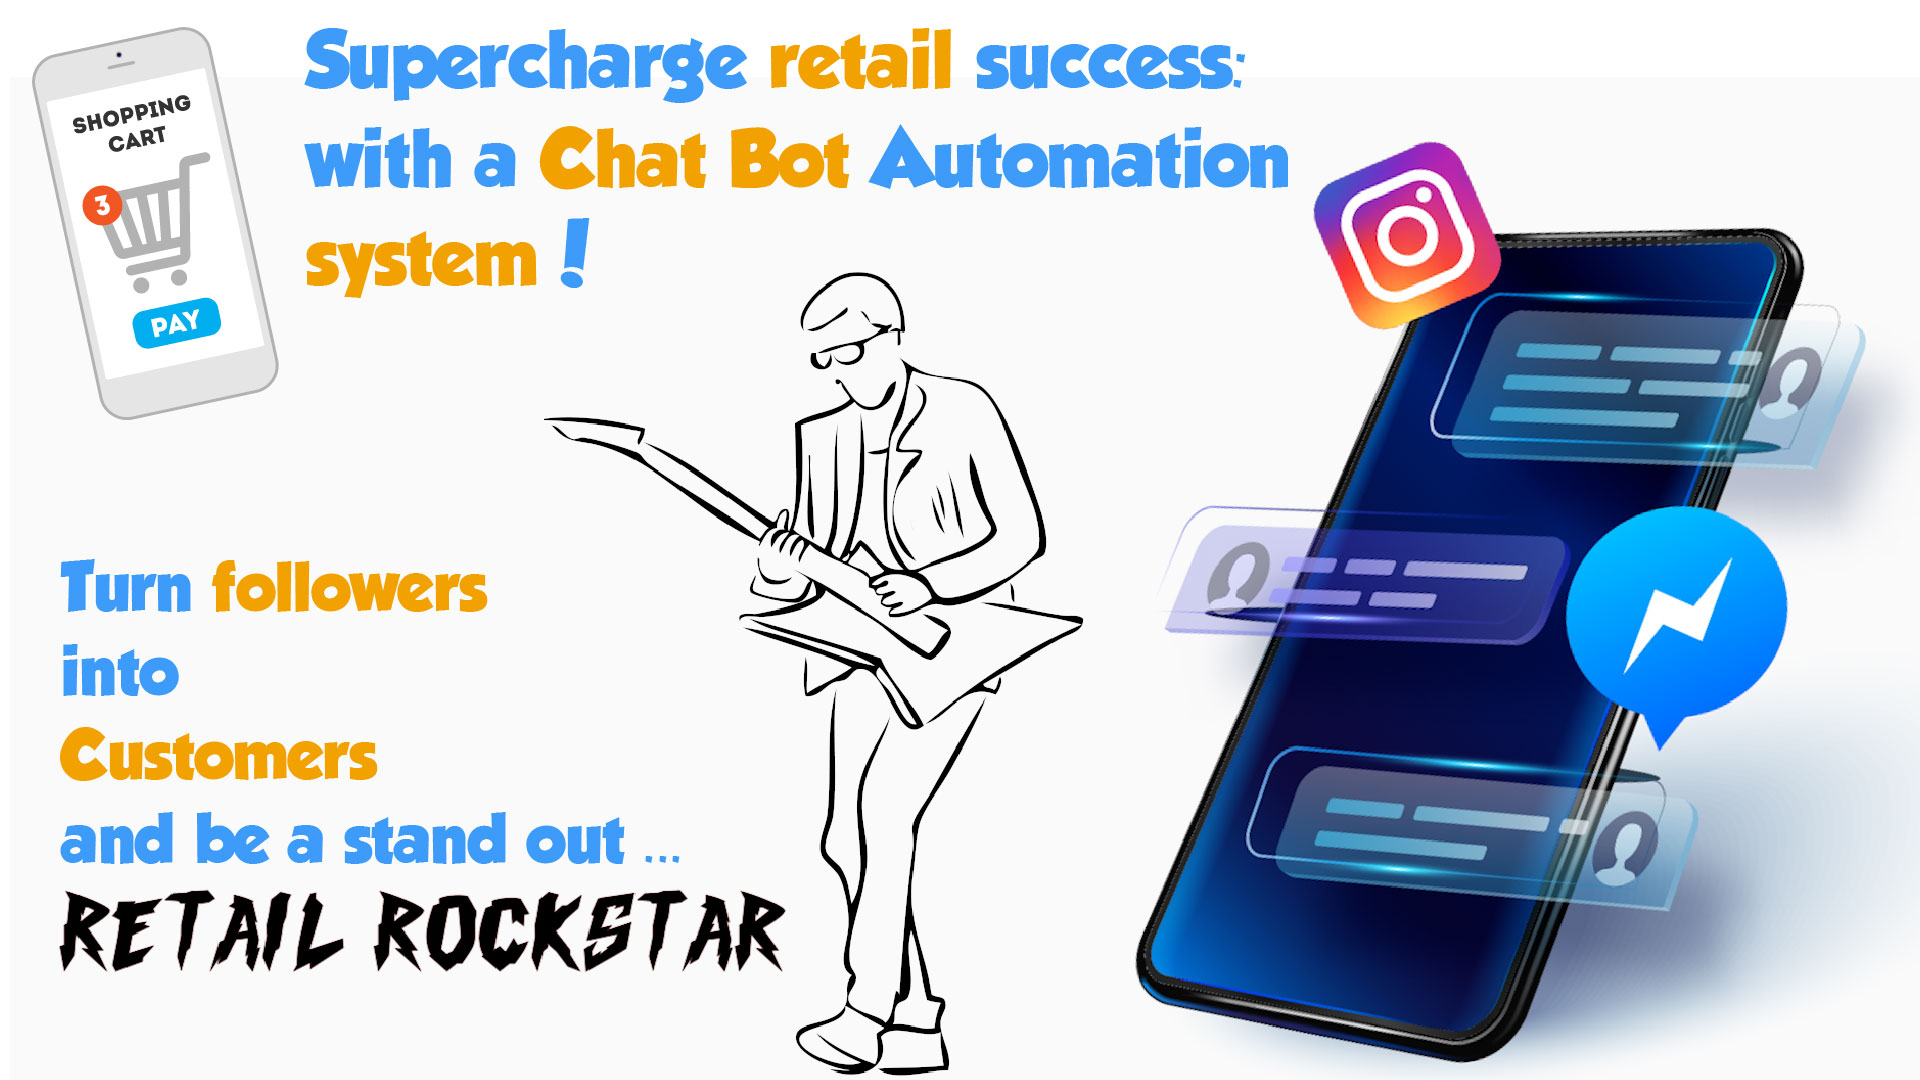 Chatbot marketing offer